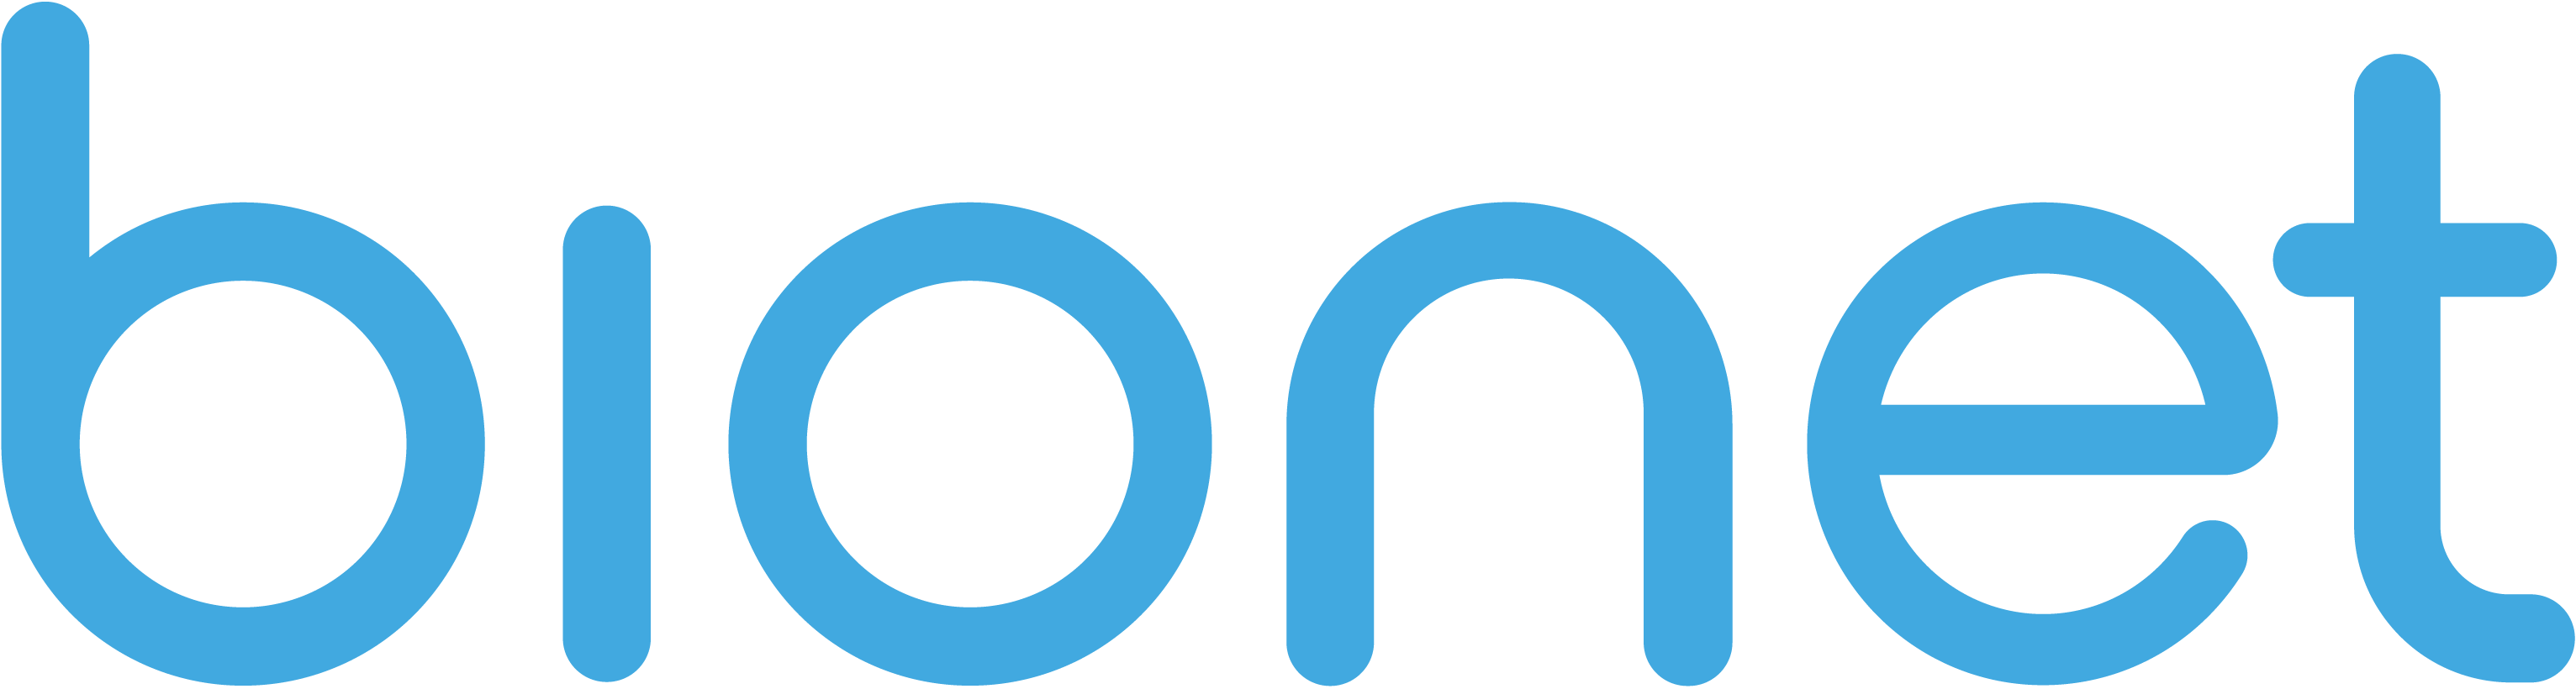 Bionet-logo-primary-blue-1c.png